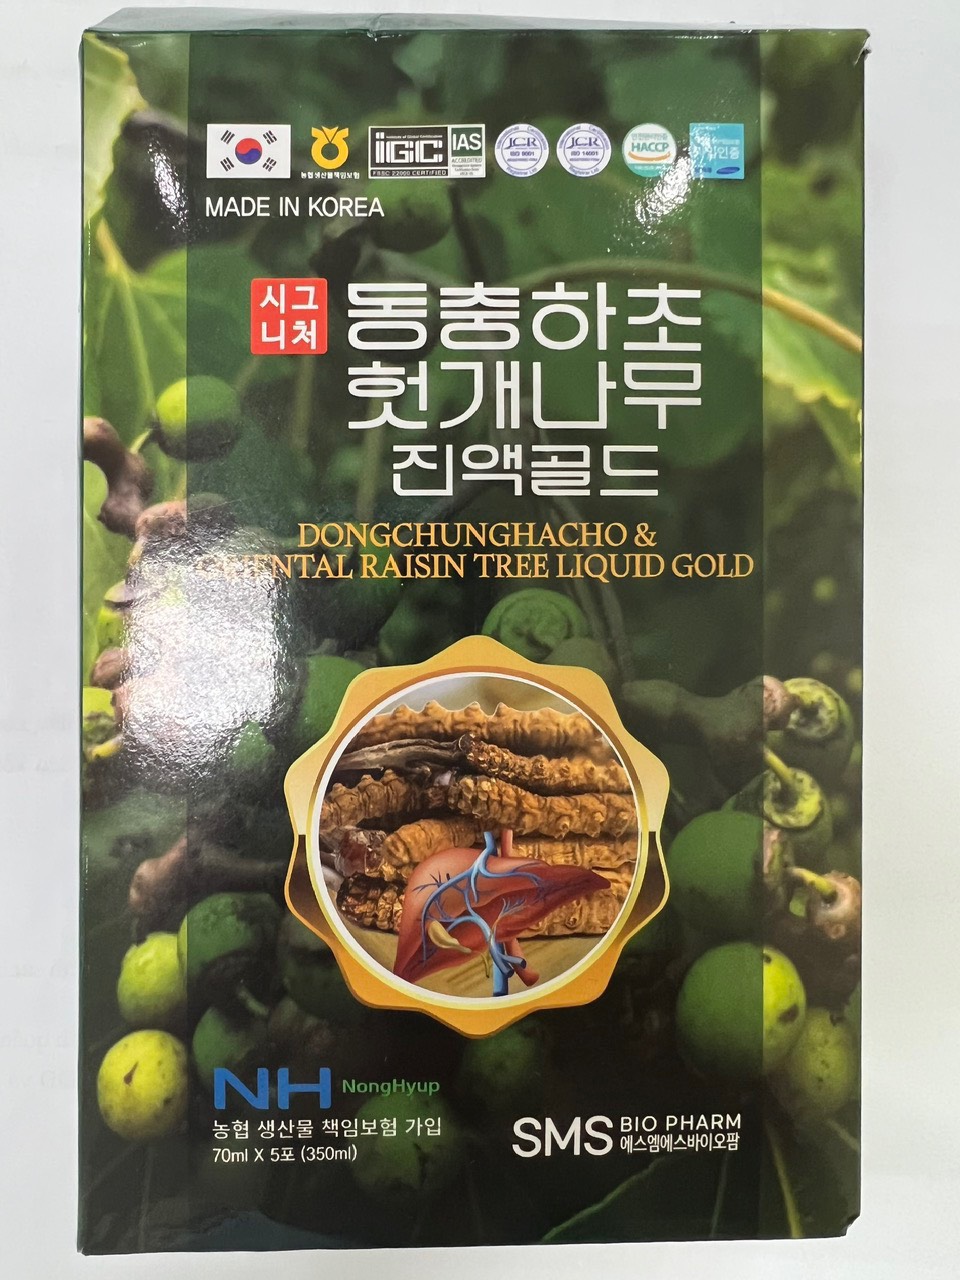 Dongchunghacho & Oriental Raisin Tree Liquid Gold